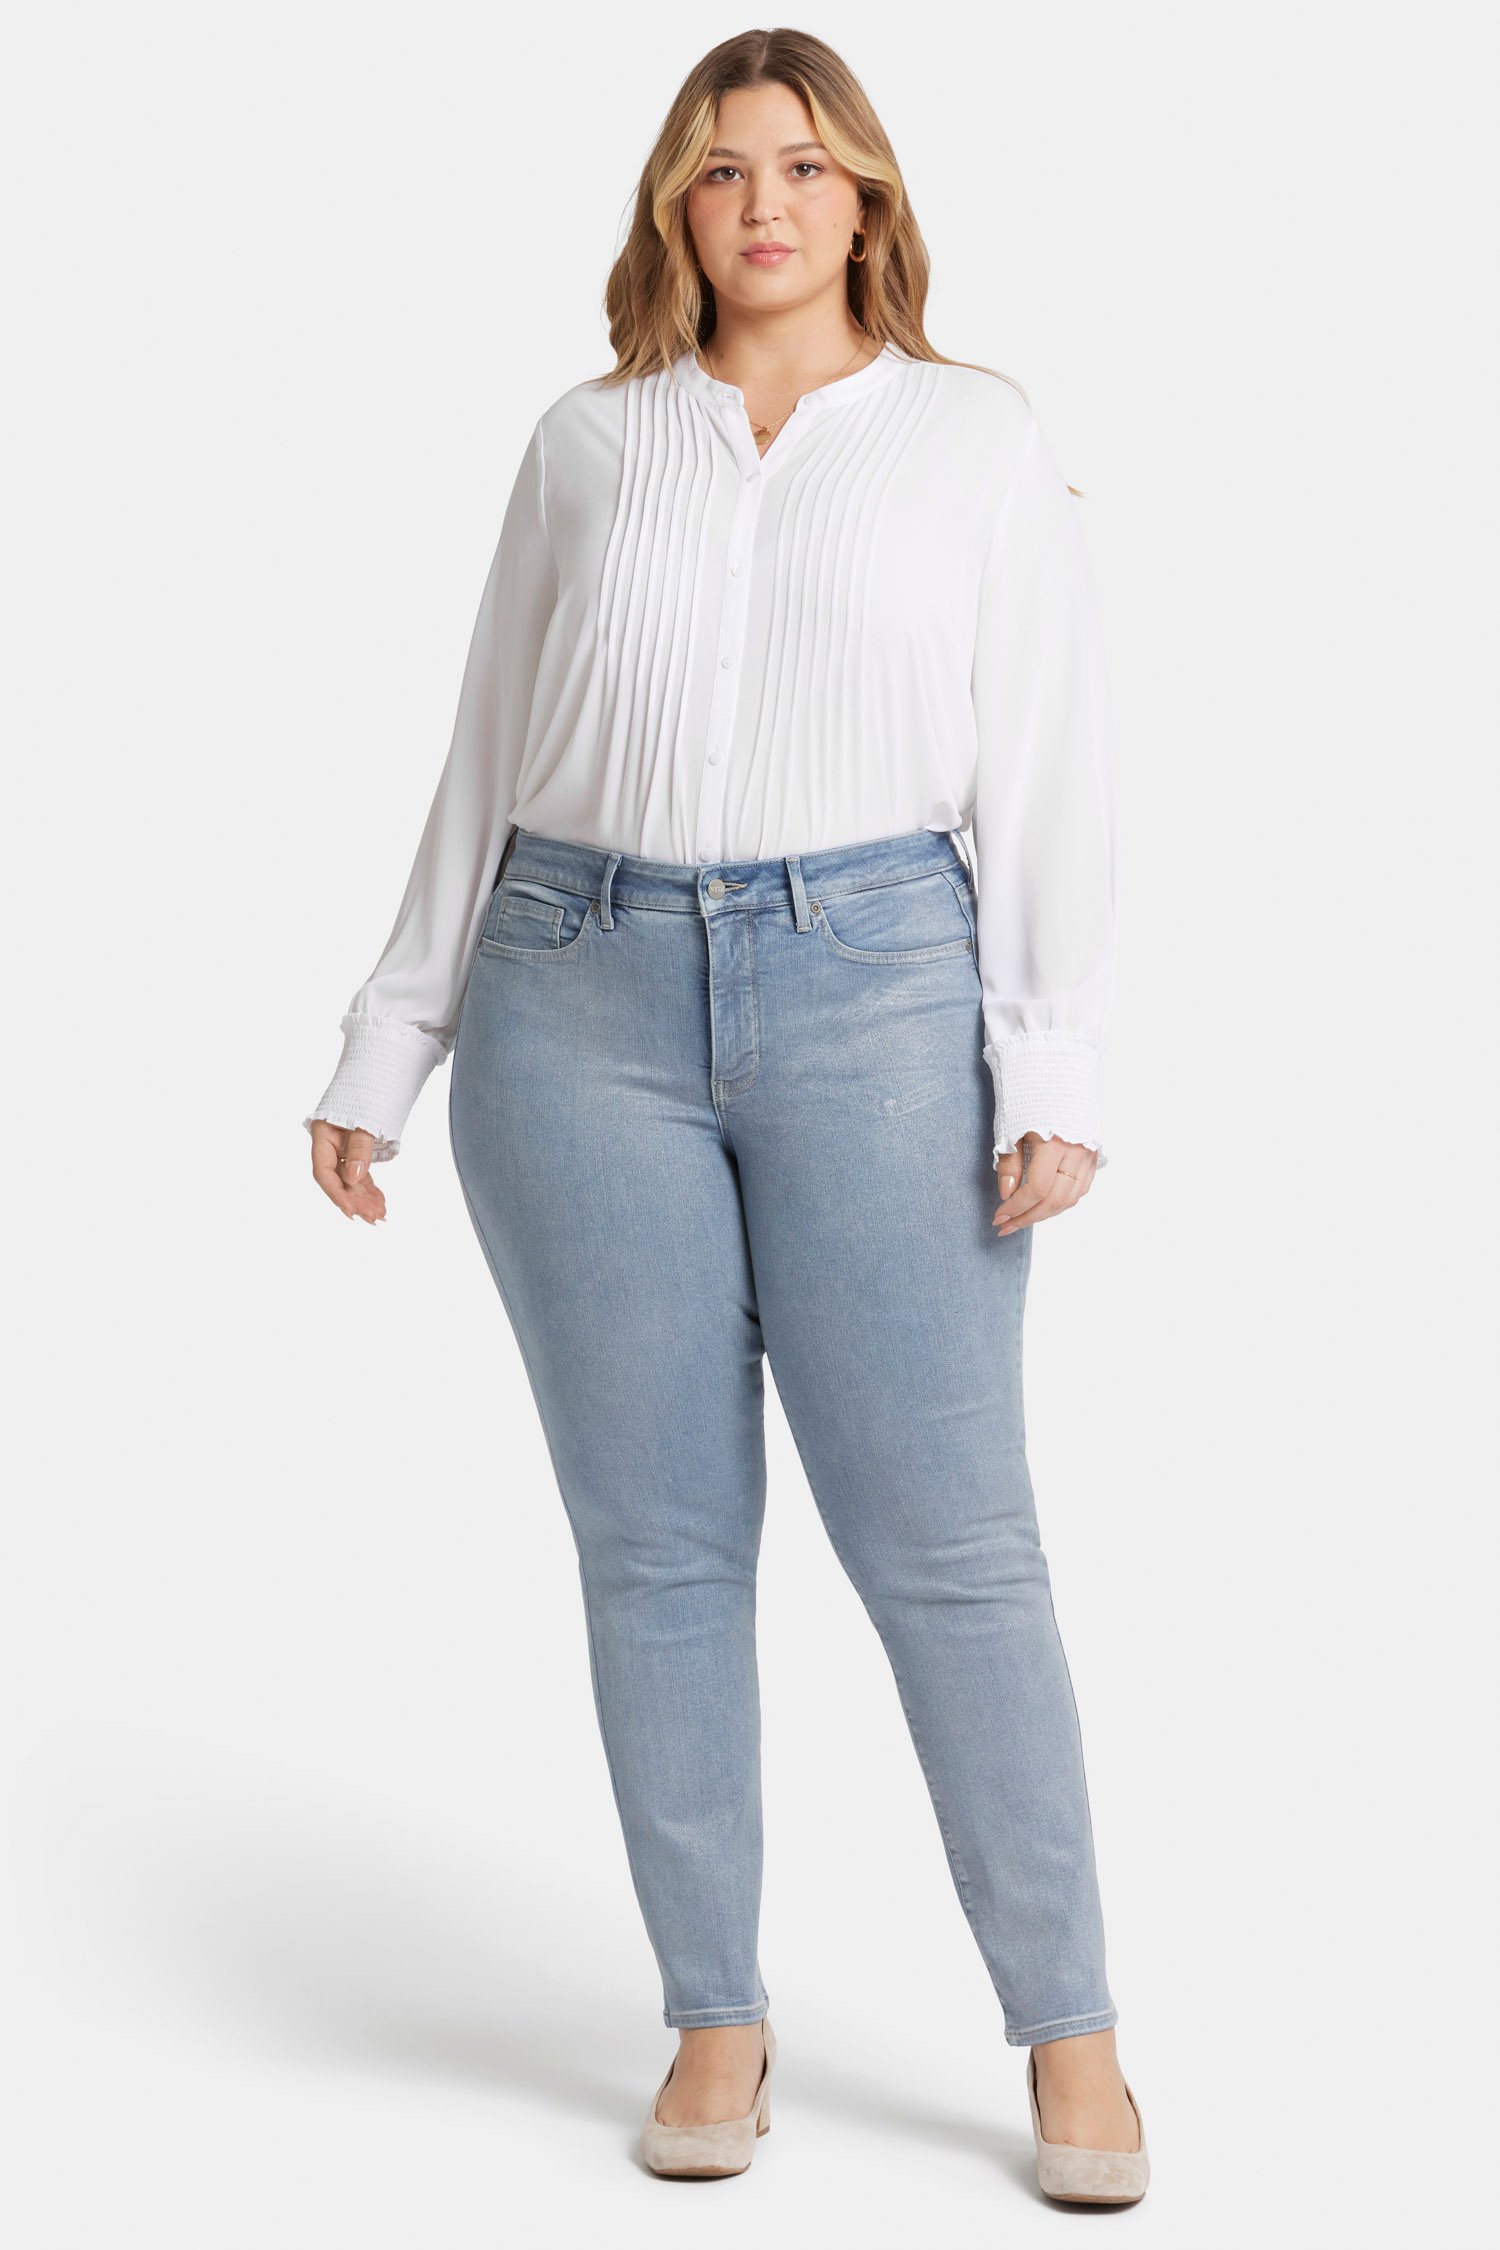 KISSPLUS Plus Size Skinny Jeans for Women High Waist Pencil Women Jeans  Curvy High Waist Stretchy Denim Pants for Women (W3168 Blue 1XL) at   Women's Jeans store